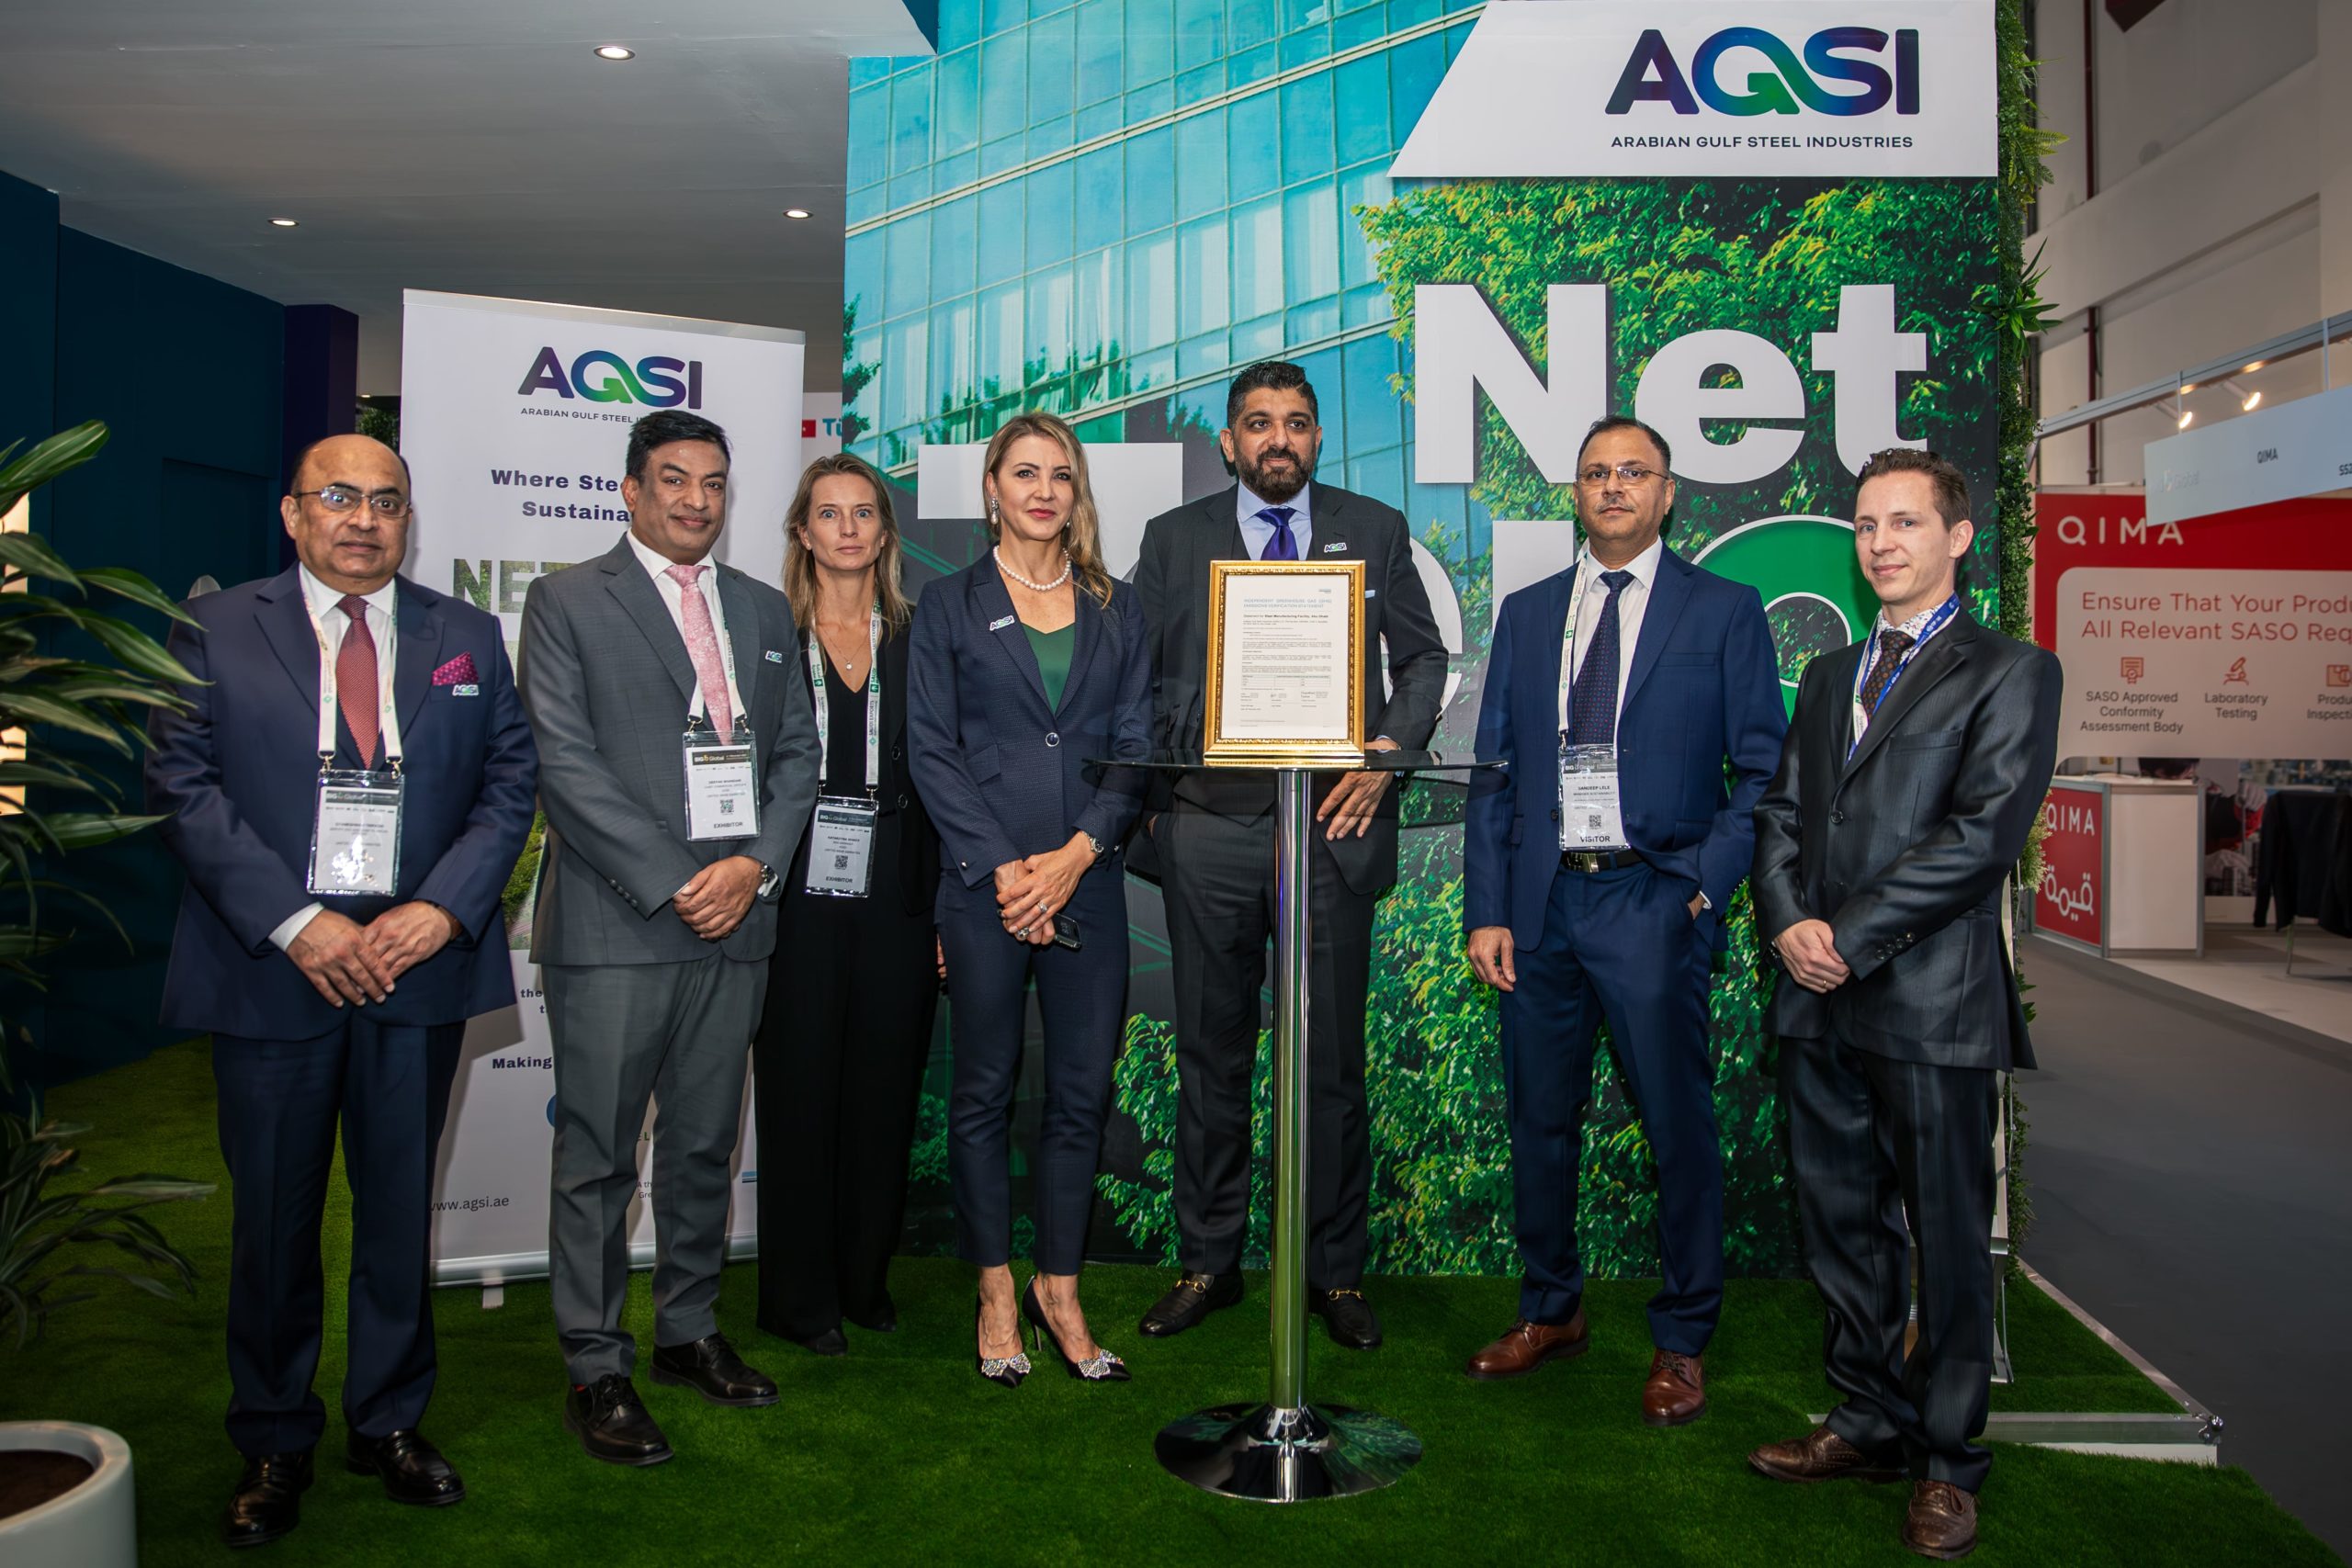 AGSI Receives Green Steel Certificate